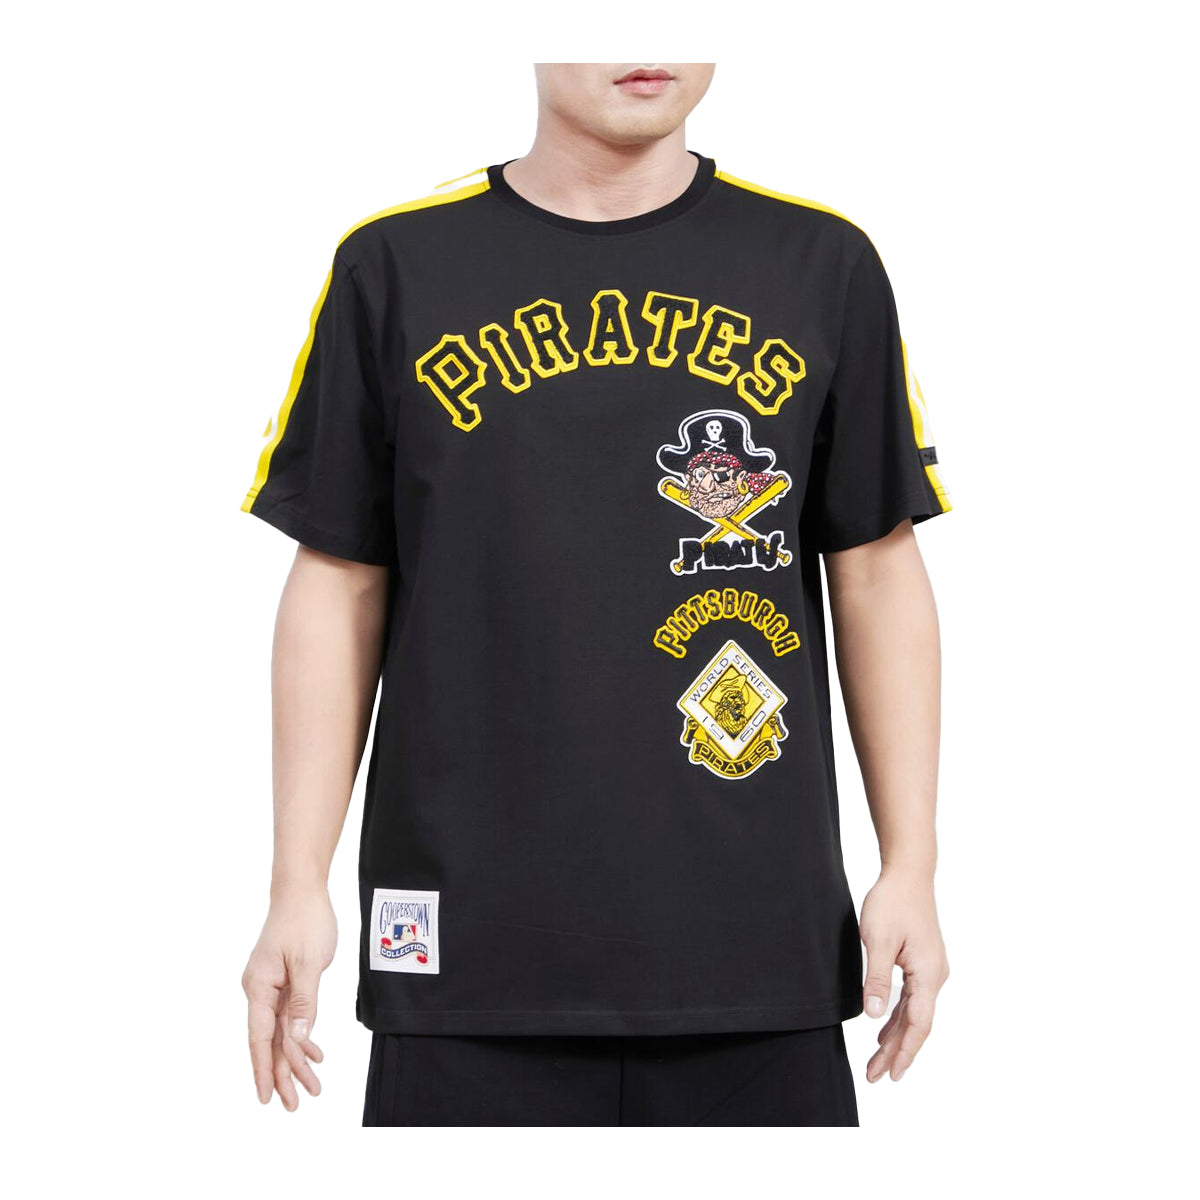 Pro Standard Mens MLB Pittsburgh Pirates Retro Classic Sj Crew Neck T-Shirt LPP135563-BYE Black/Yellow 3XL